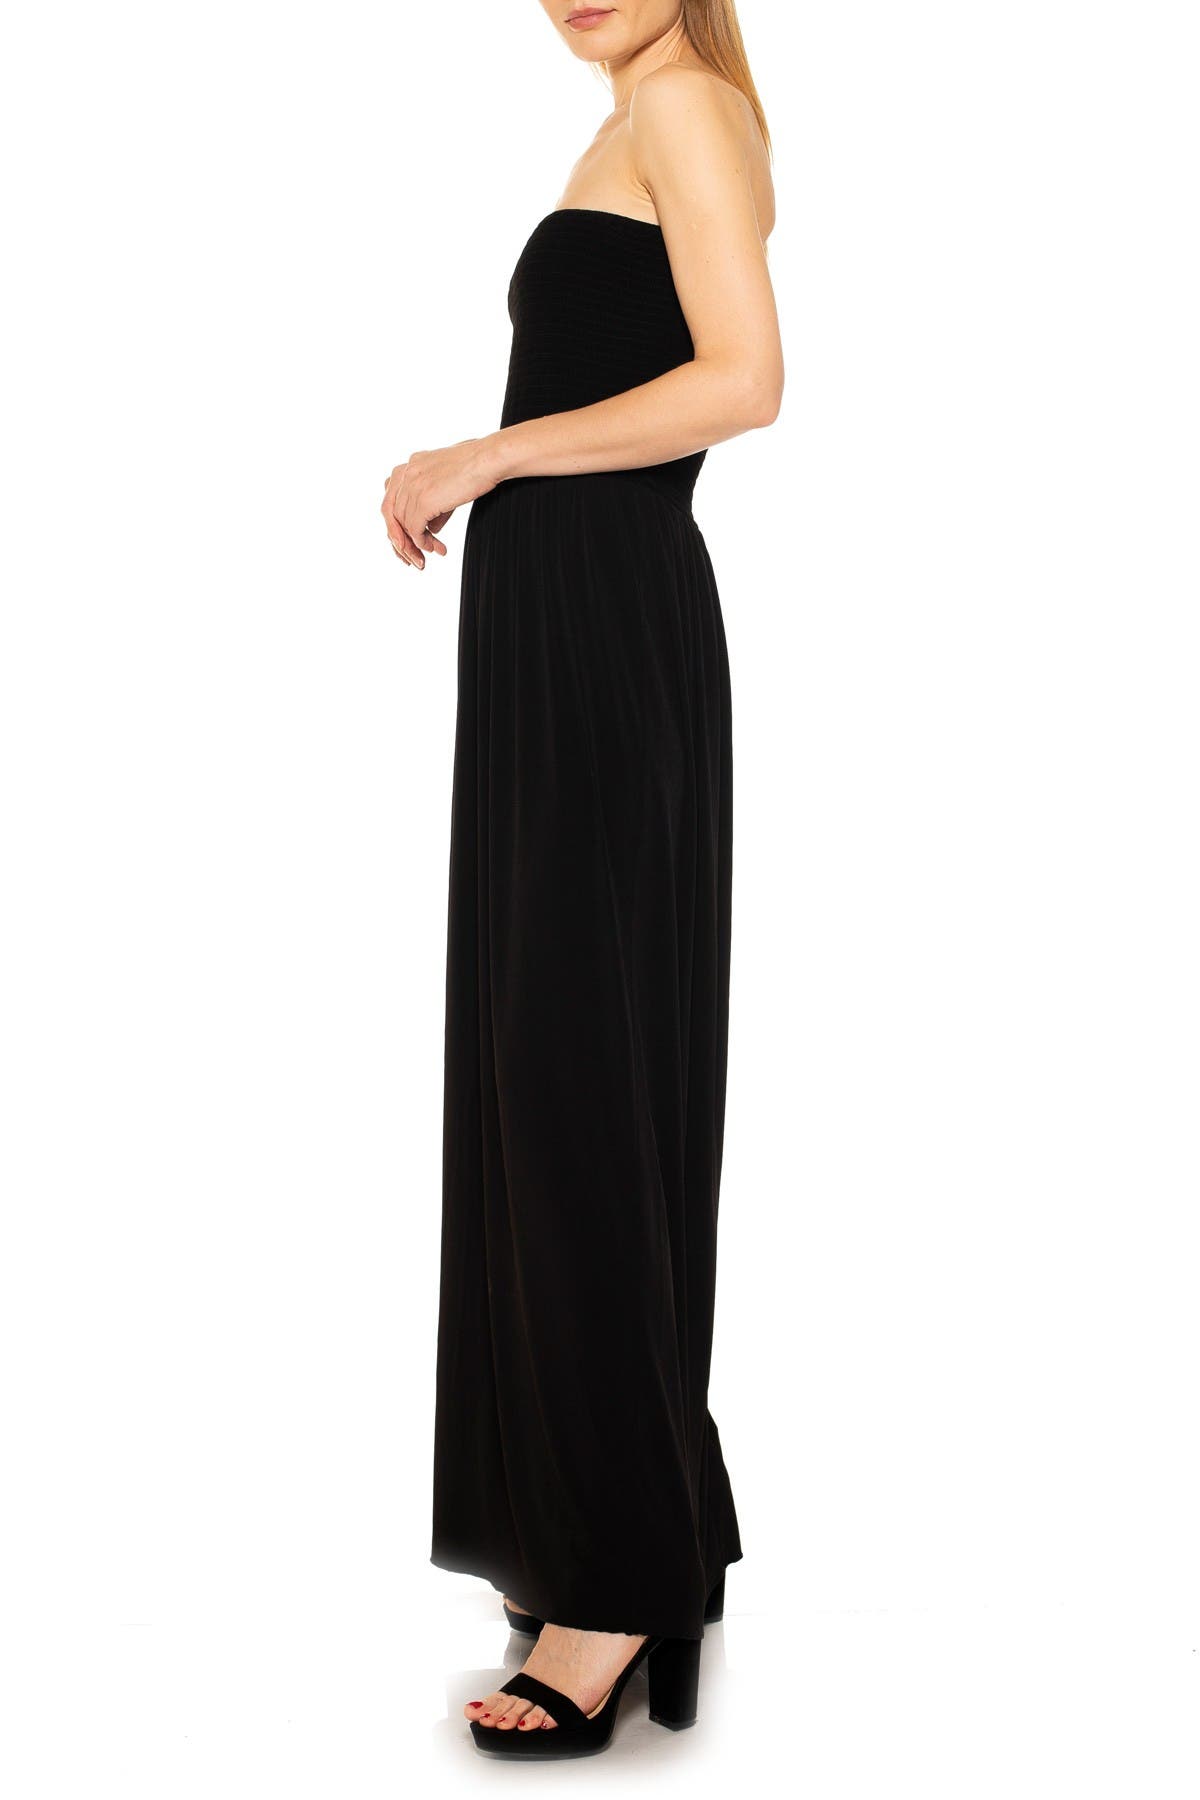 Alexia Admor Emmy Strapless Smocked Maxi Dress In Black